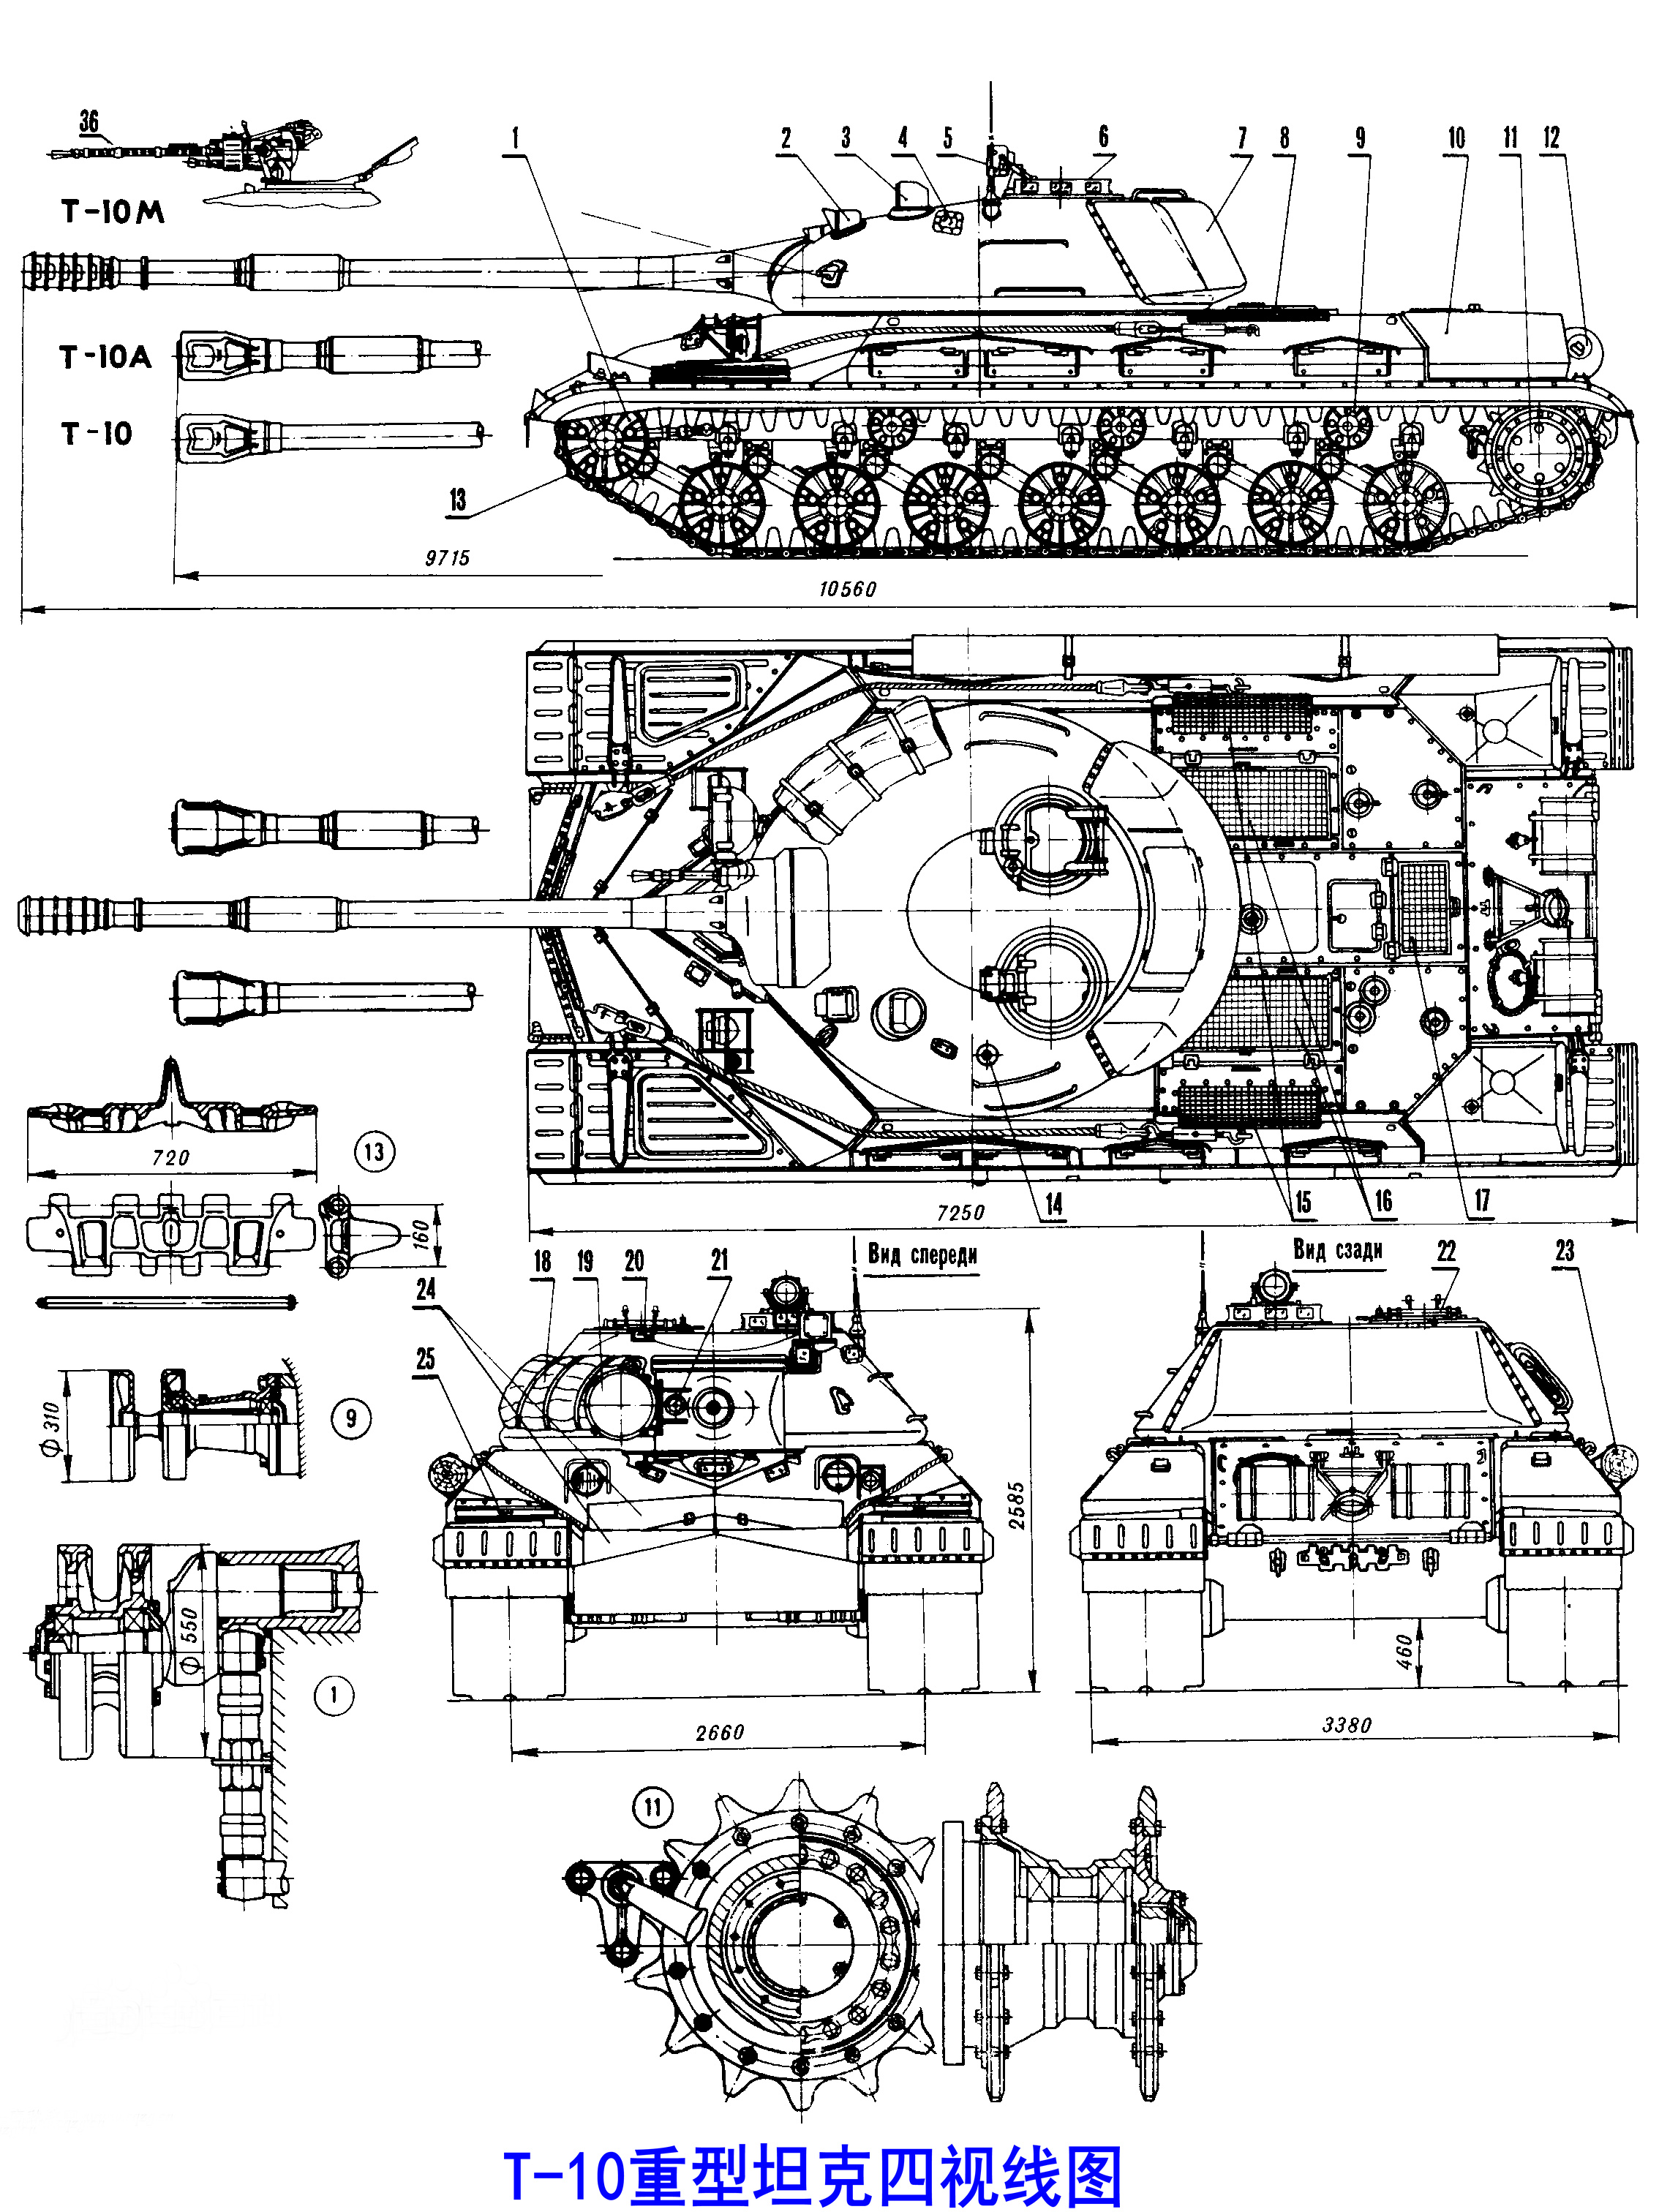 T-10M重型坦克四視線圖